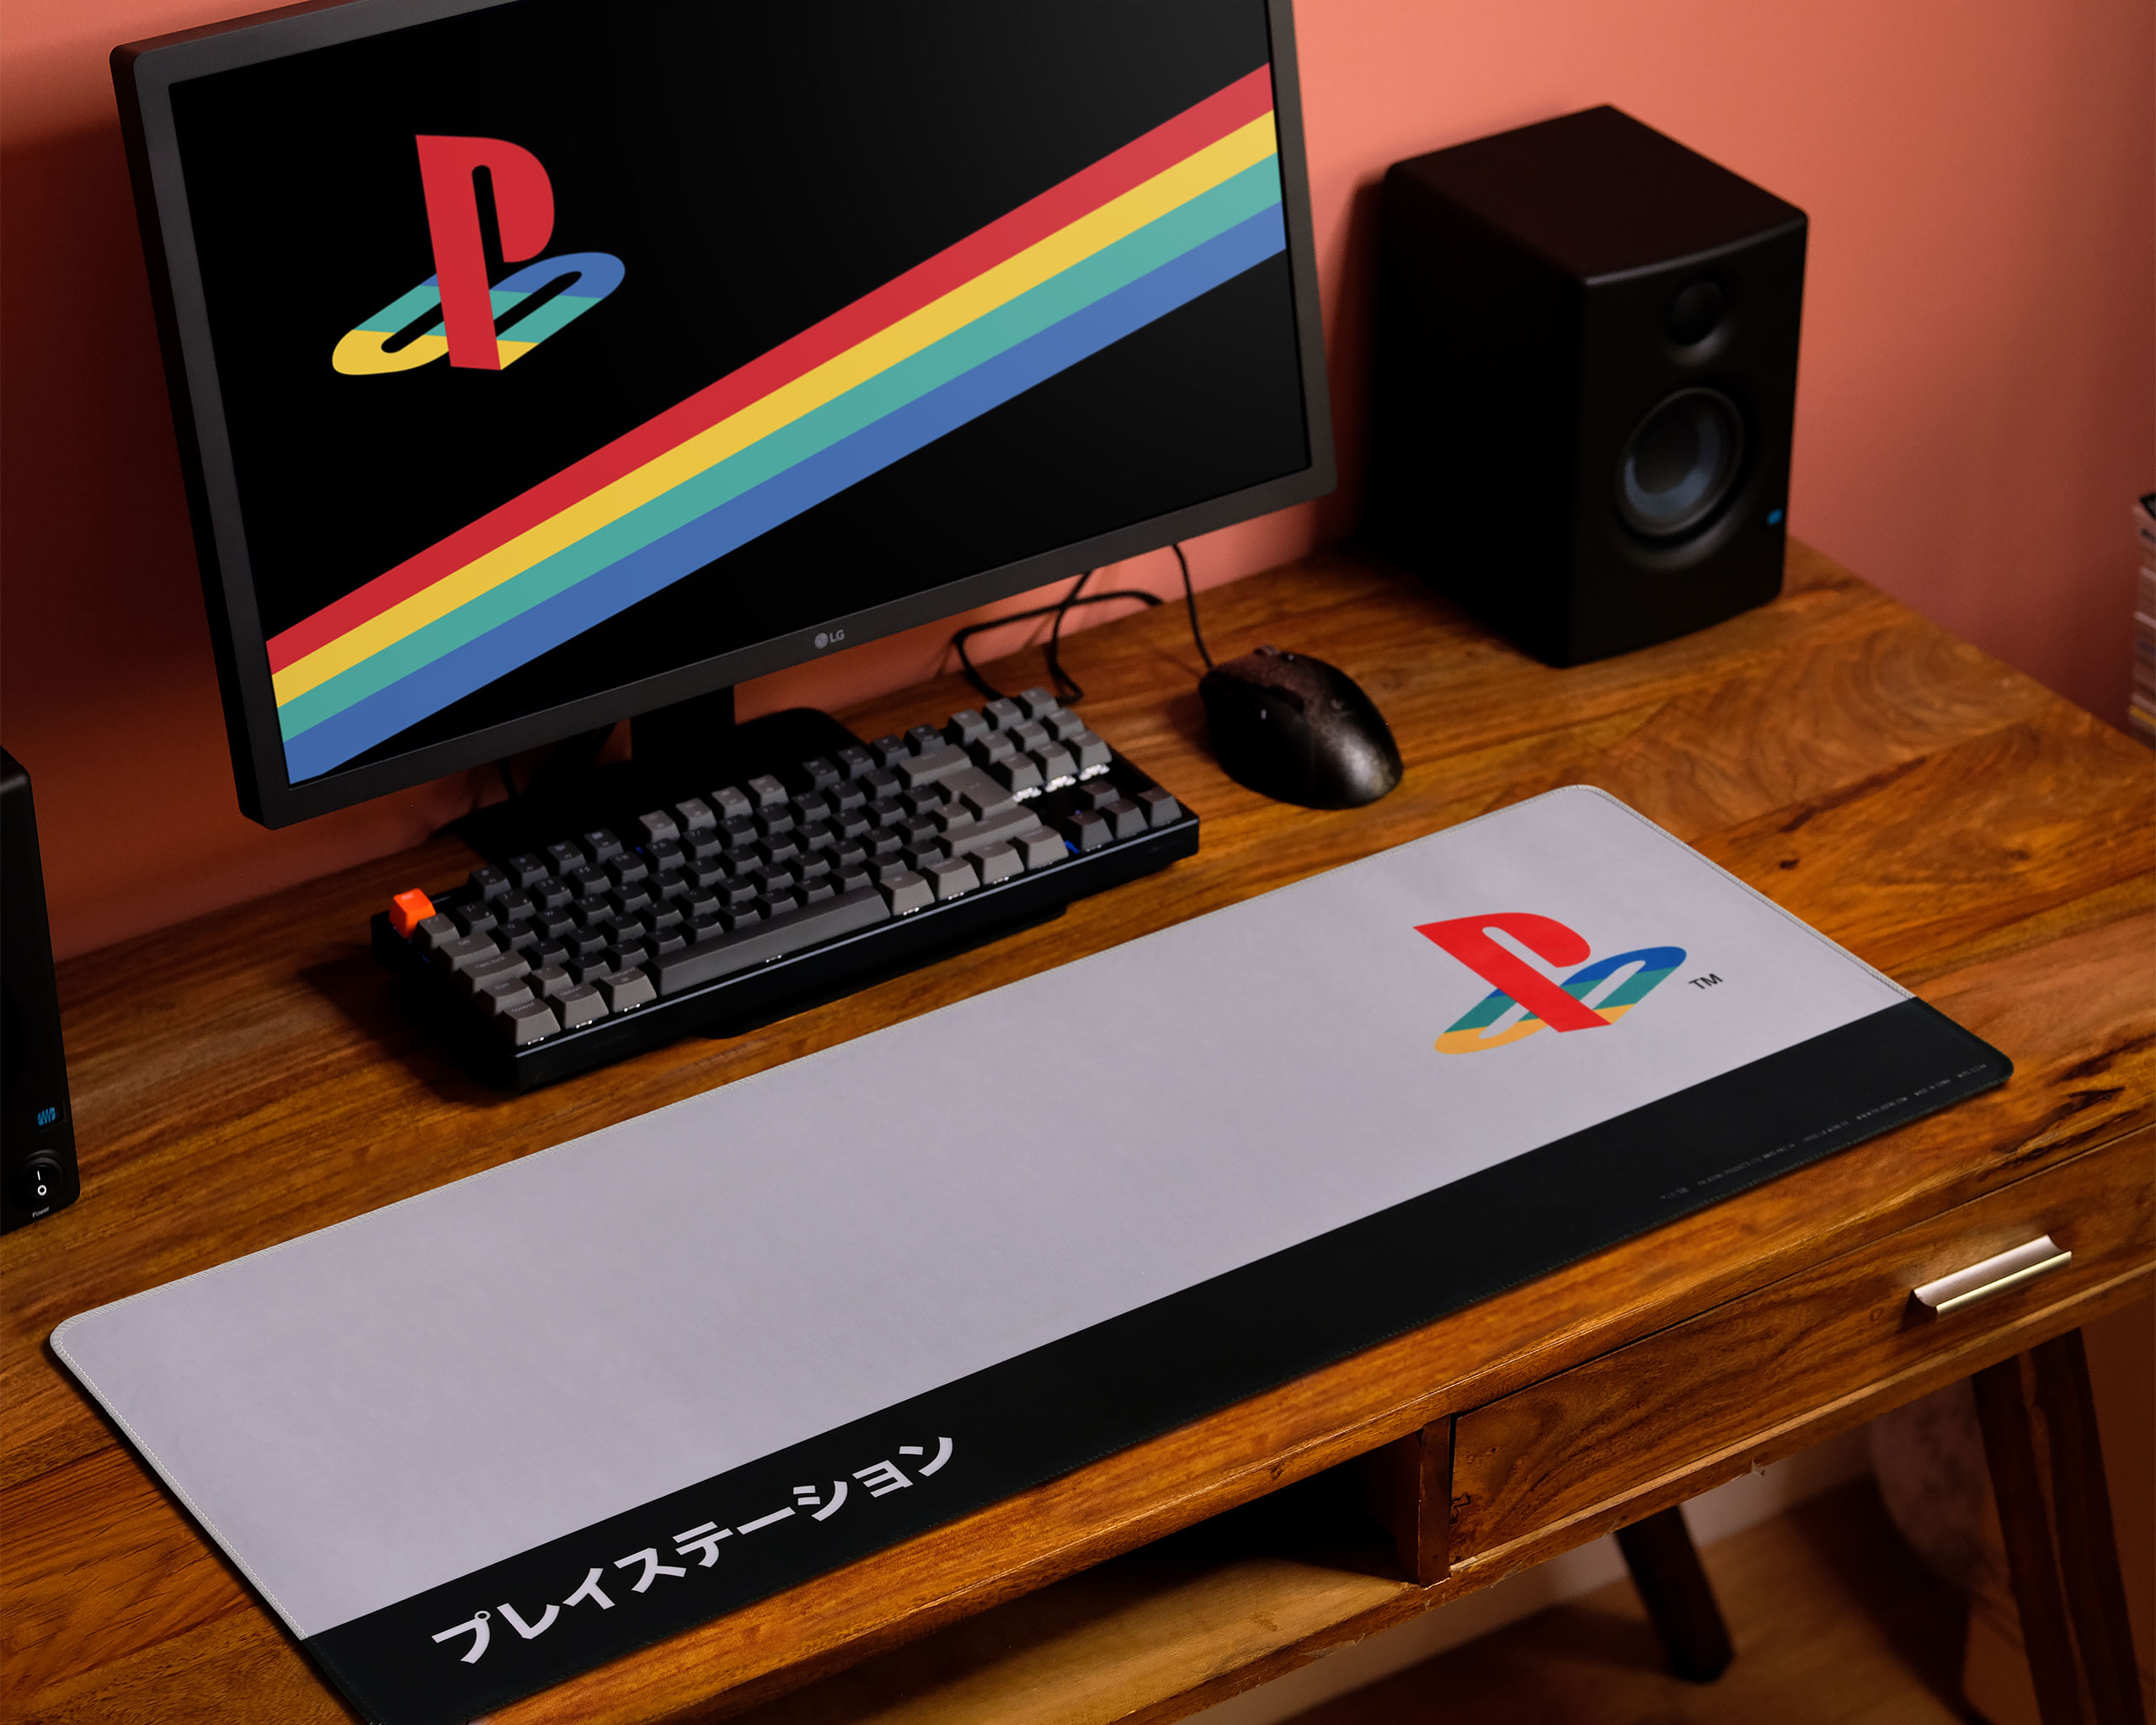 PlayStation - Logo Muismat